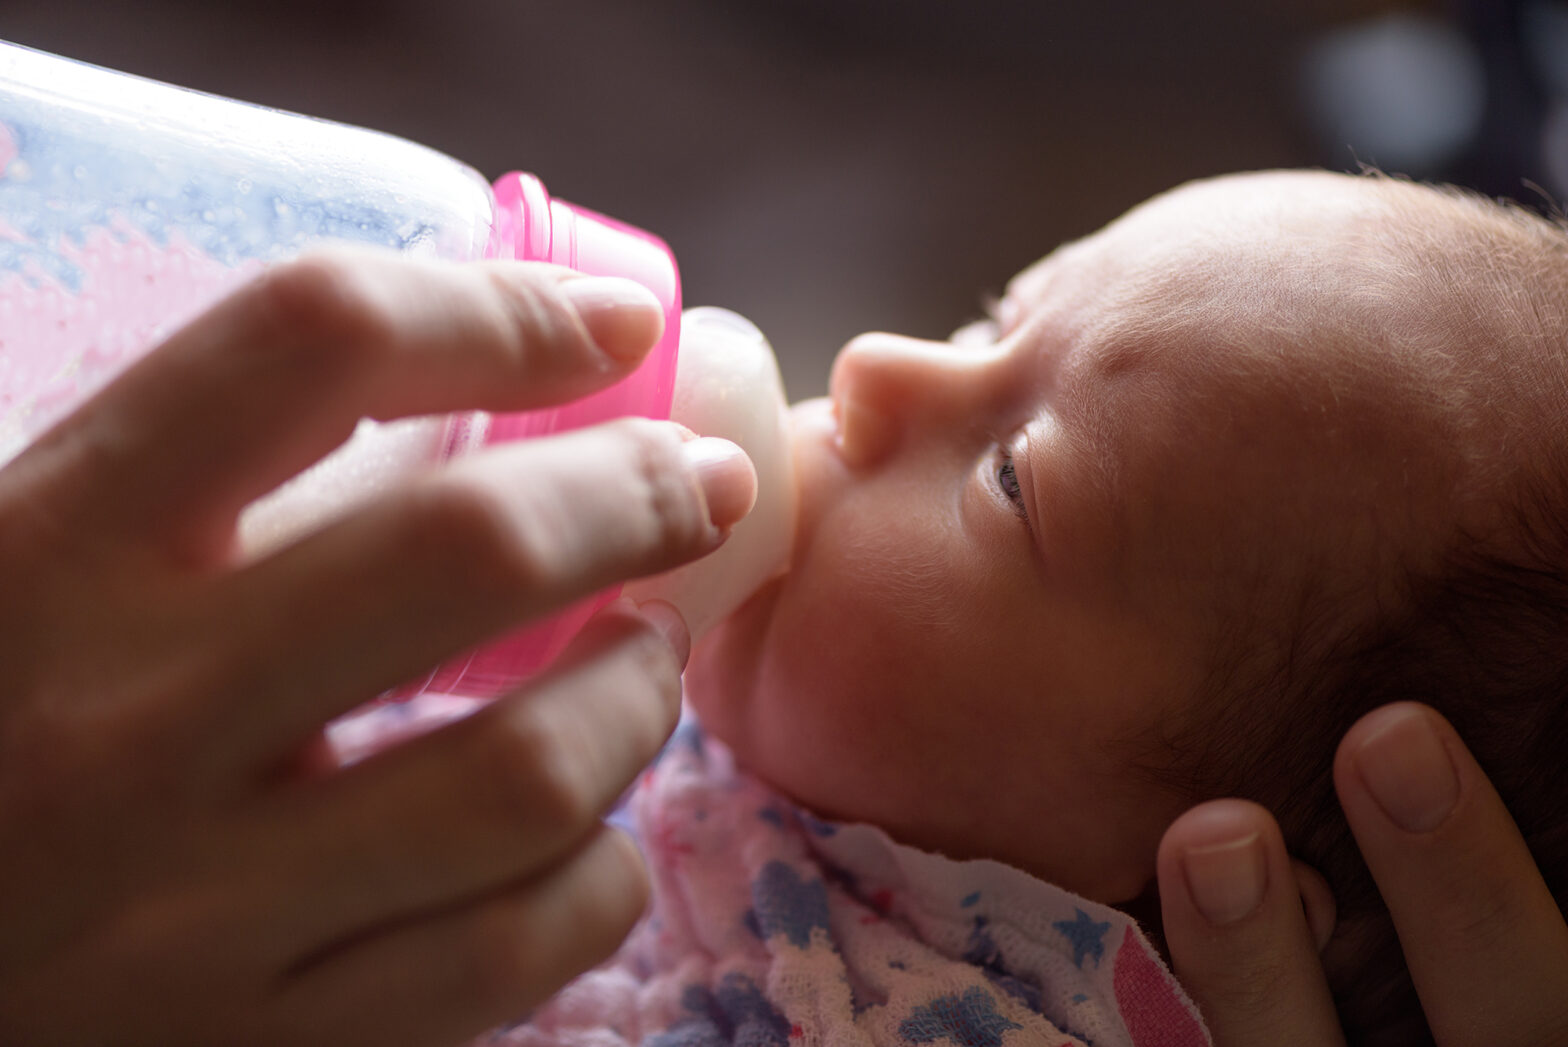 Infant taking milk from a bottle